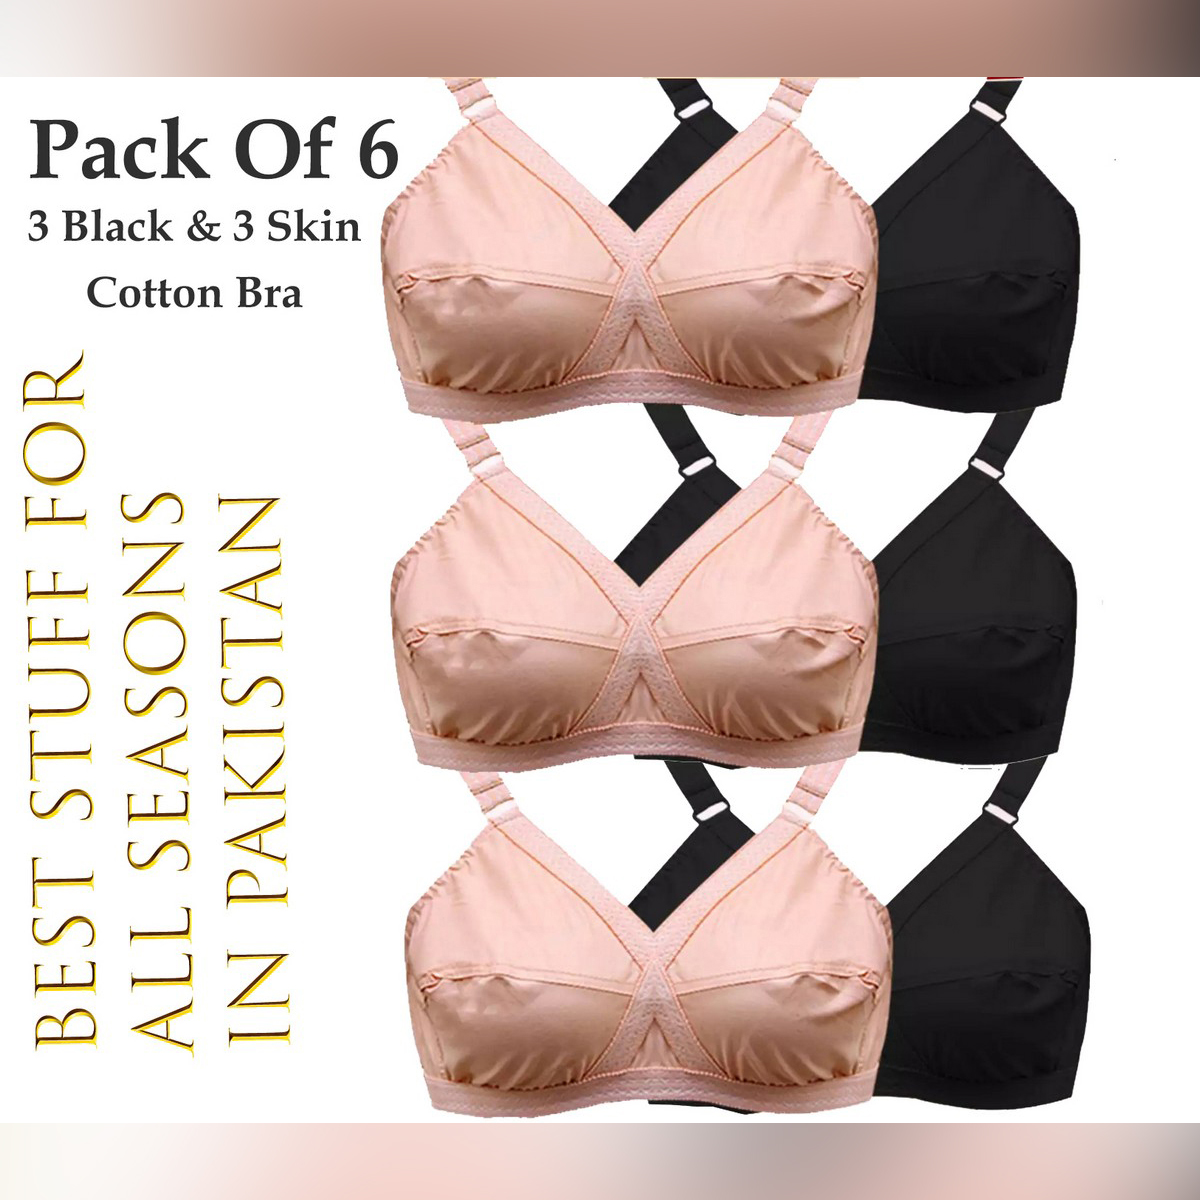 Pack of 6 Women Ladies Girls Skin&Black colour Bra Brief Blouse